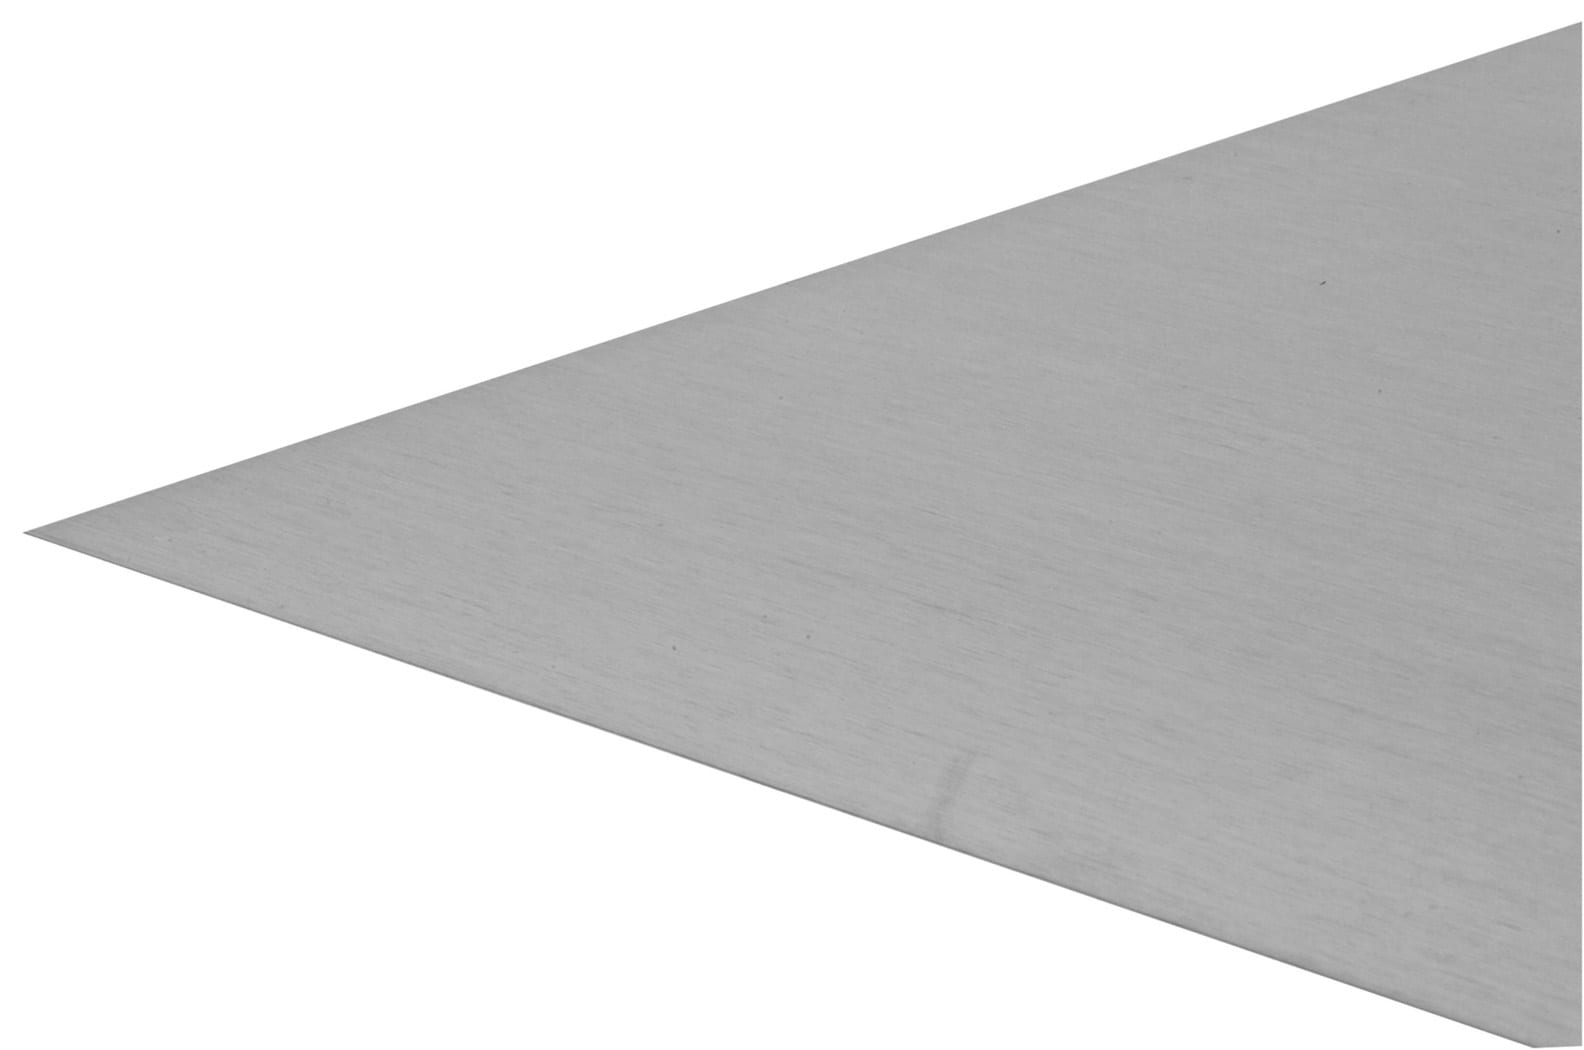 Sheet Pan Aluminum 1/8 Size 10x6, Aluminum, Silver, Pack of 8 